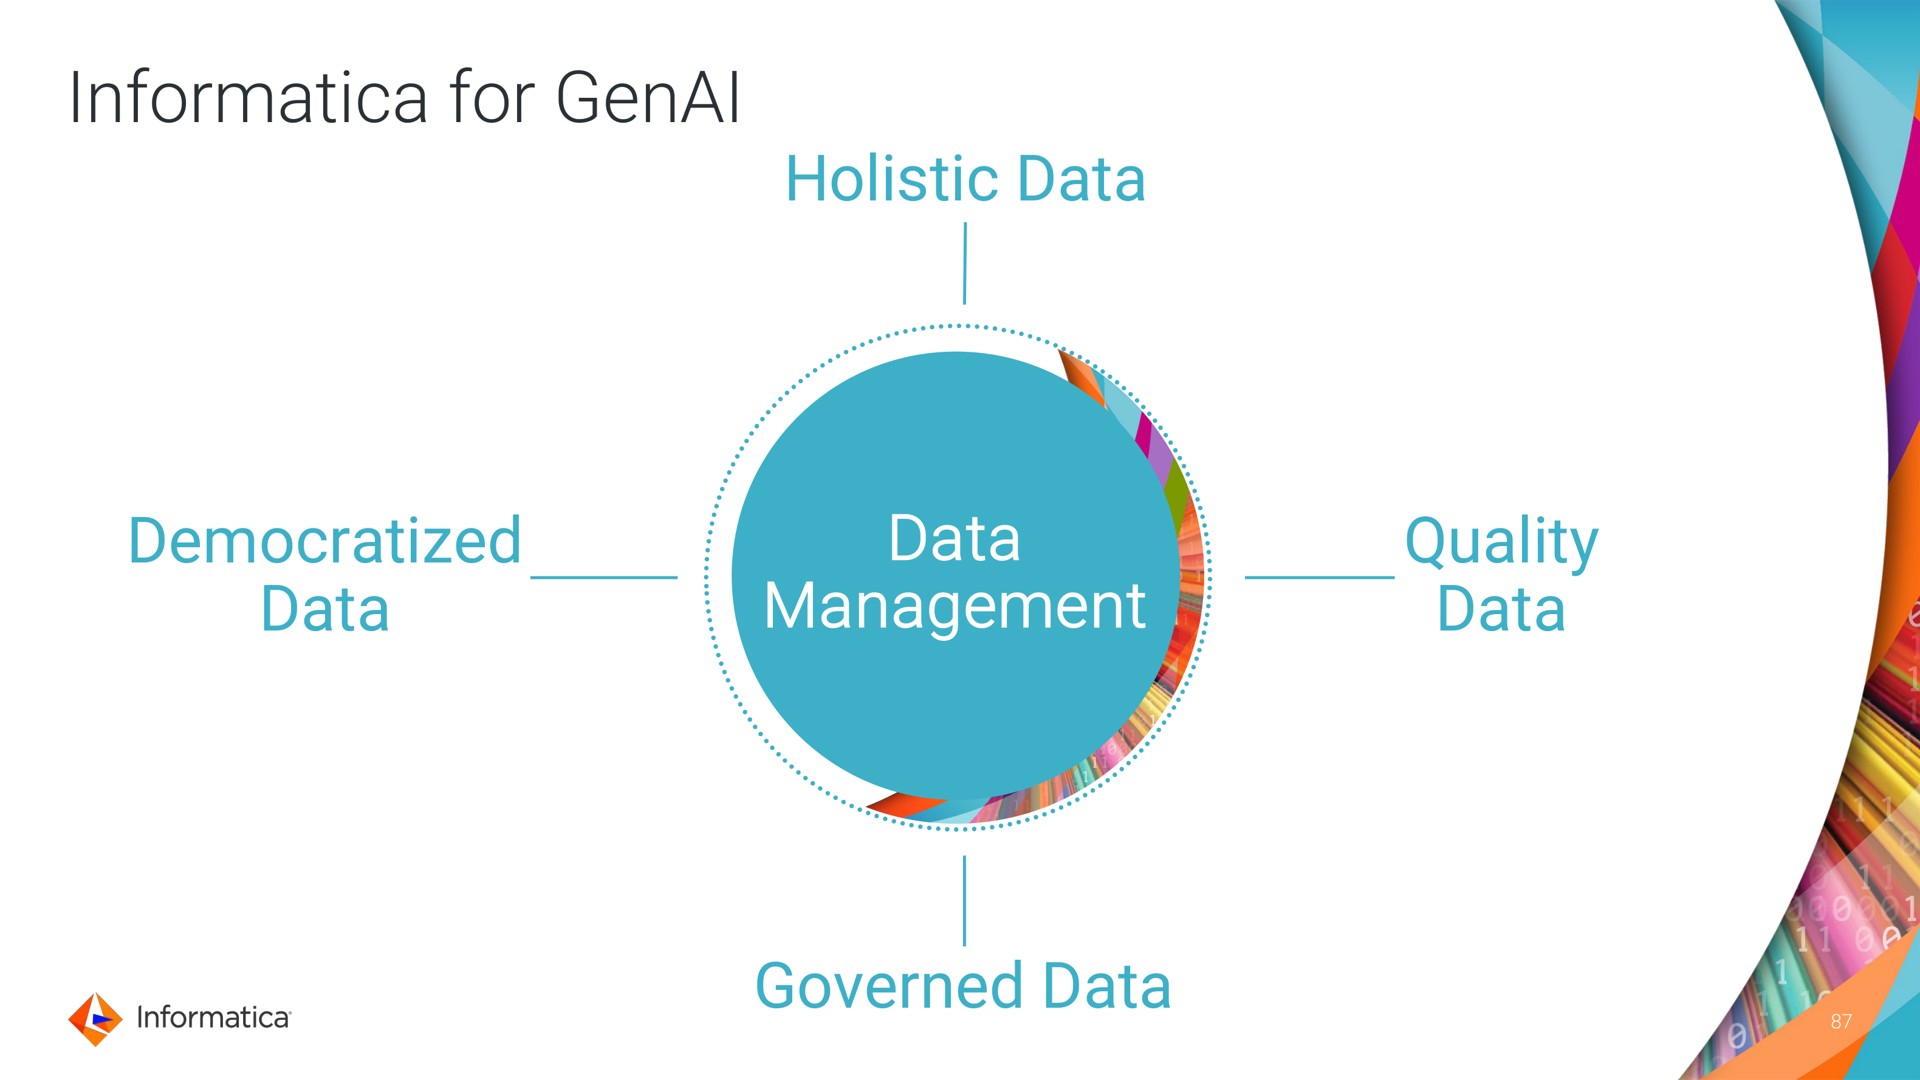 for holistic data democratized data data management quality data governed data genal i | Informatica